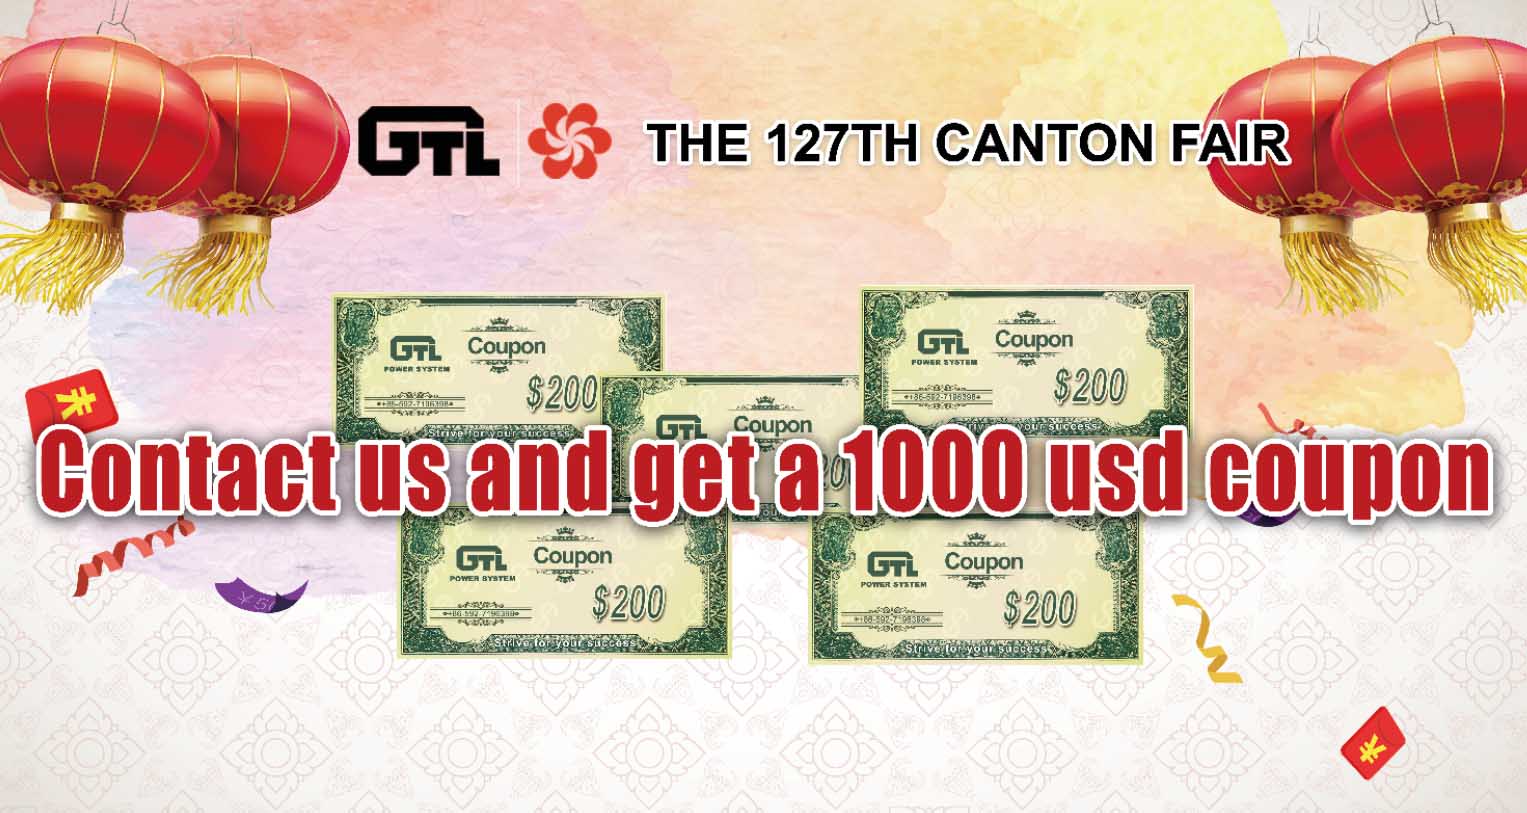 USD1,000 coupon give away 